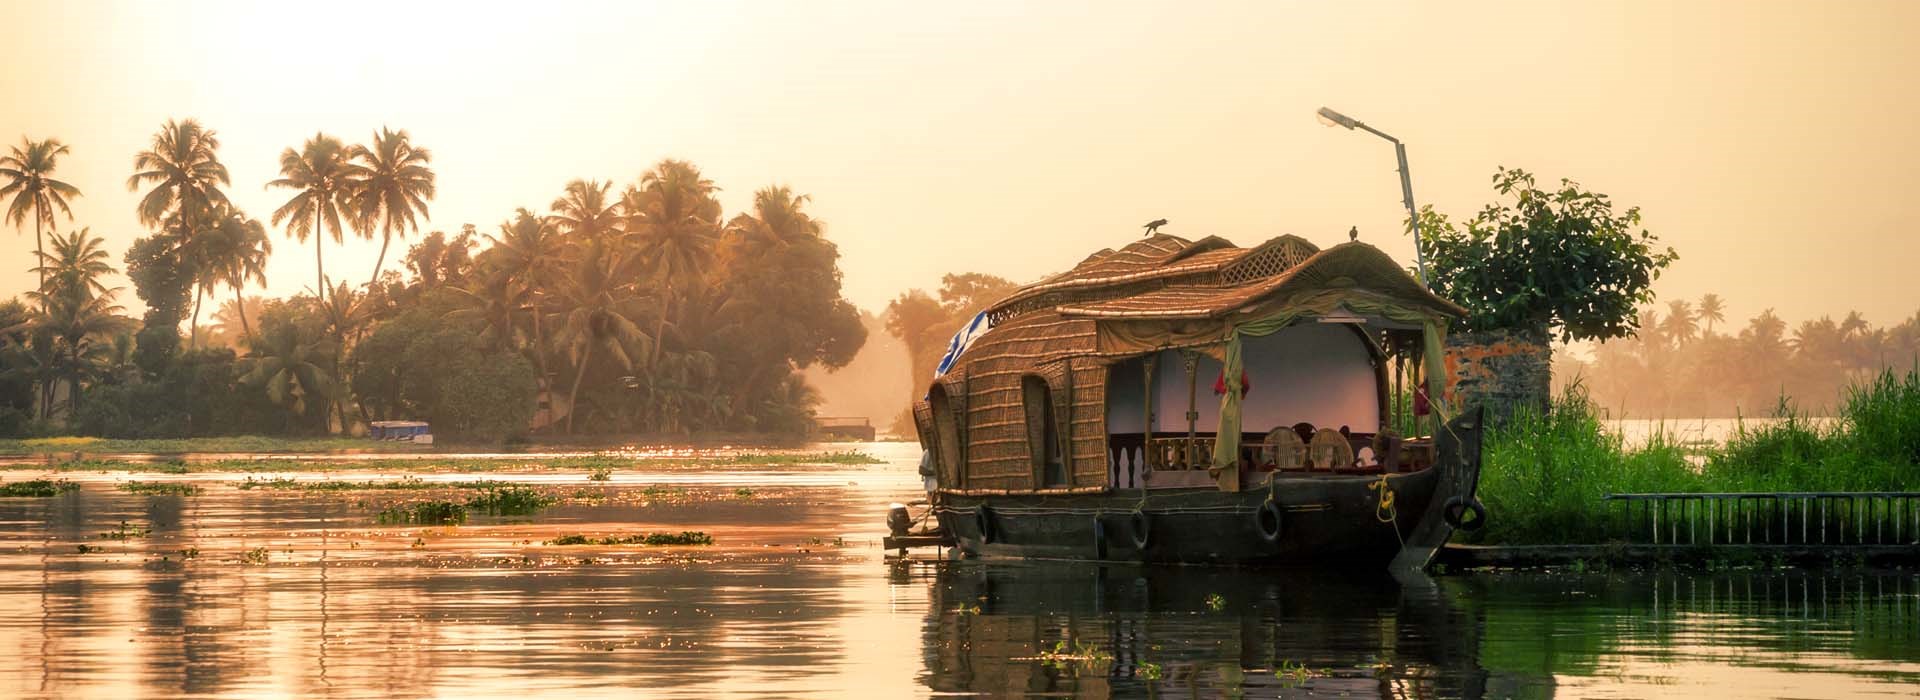 houseboat back waters kerala